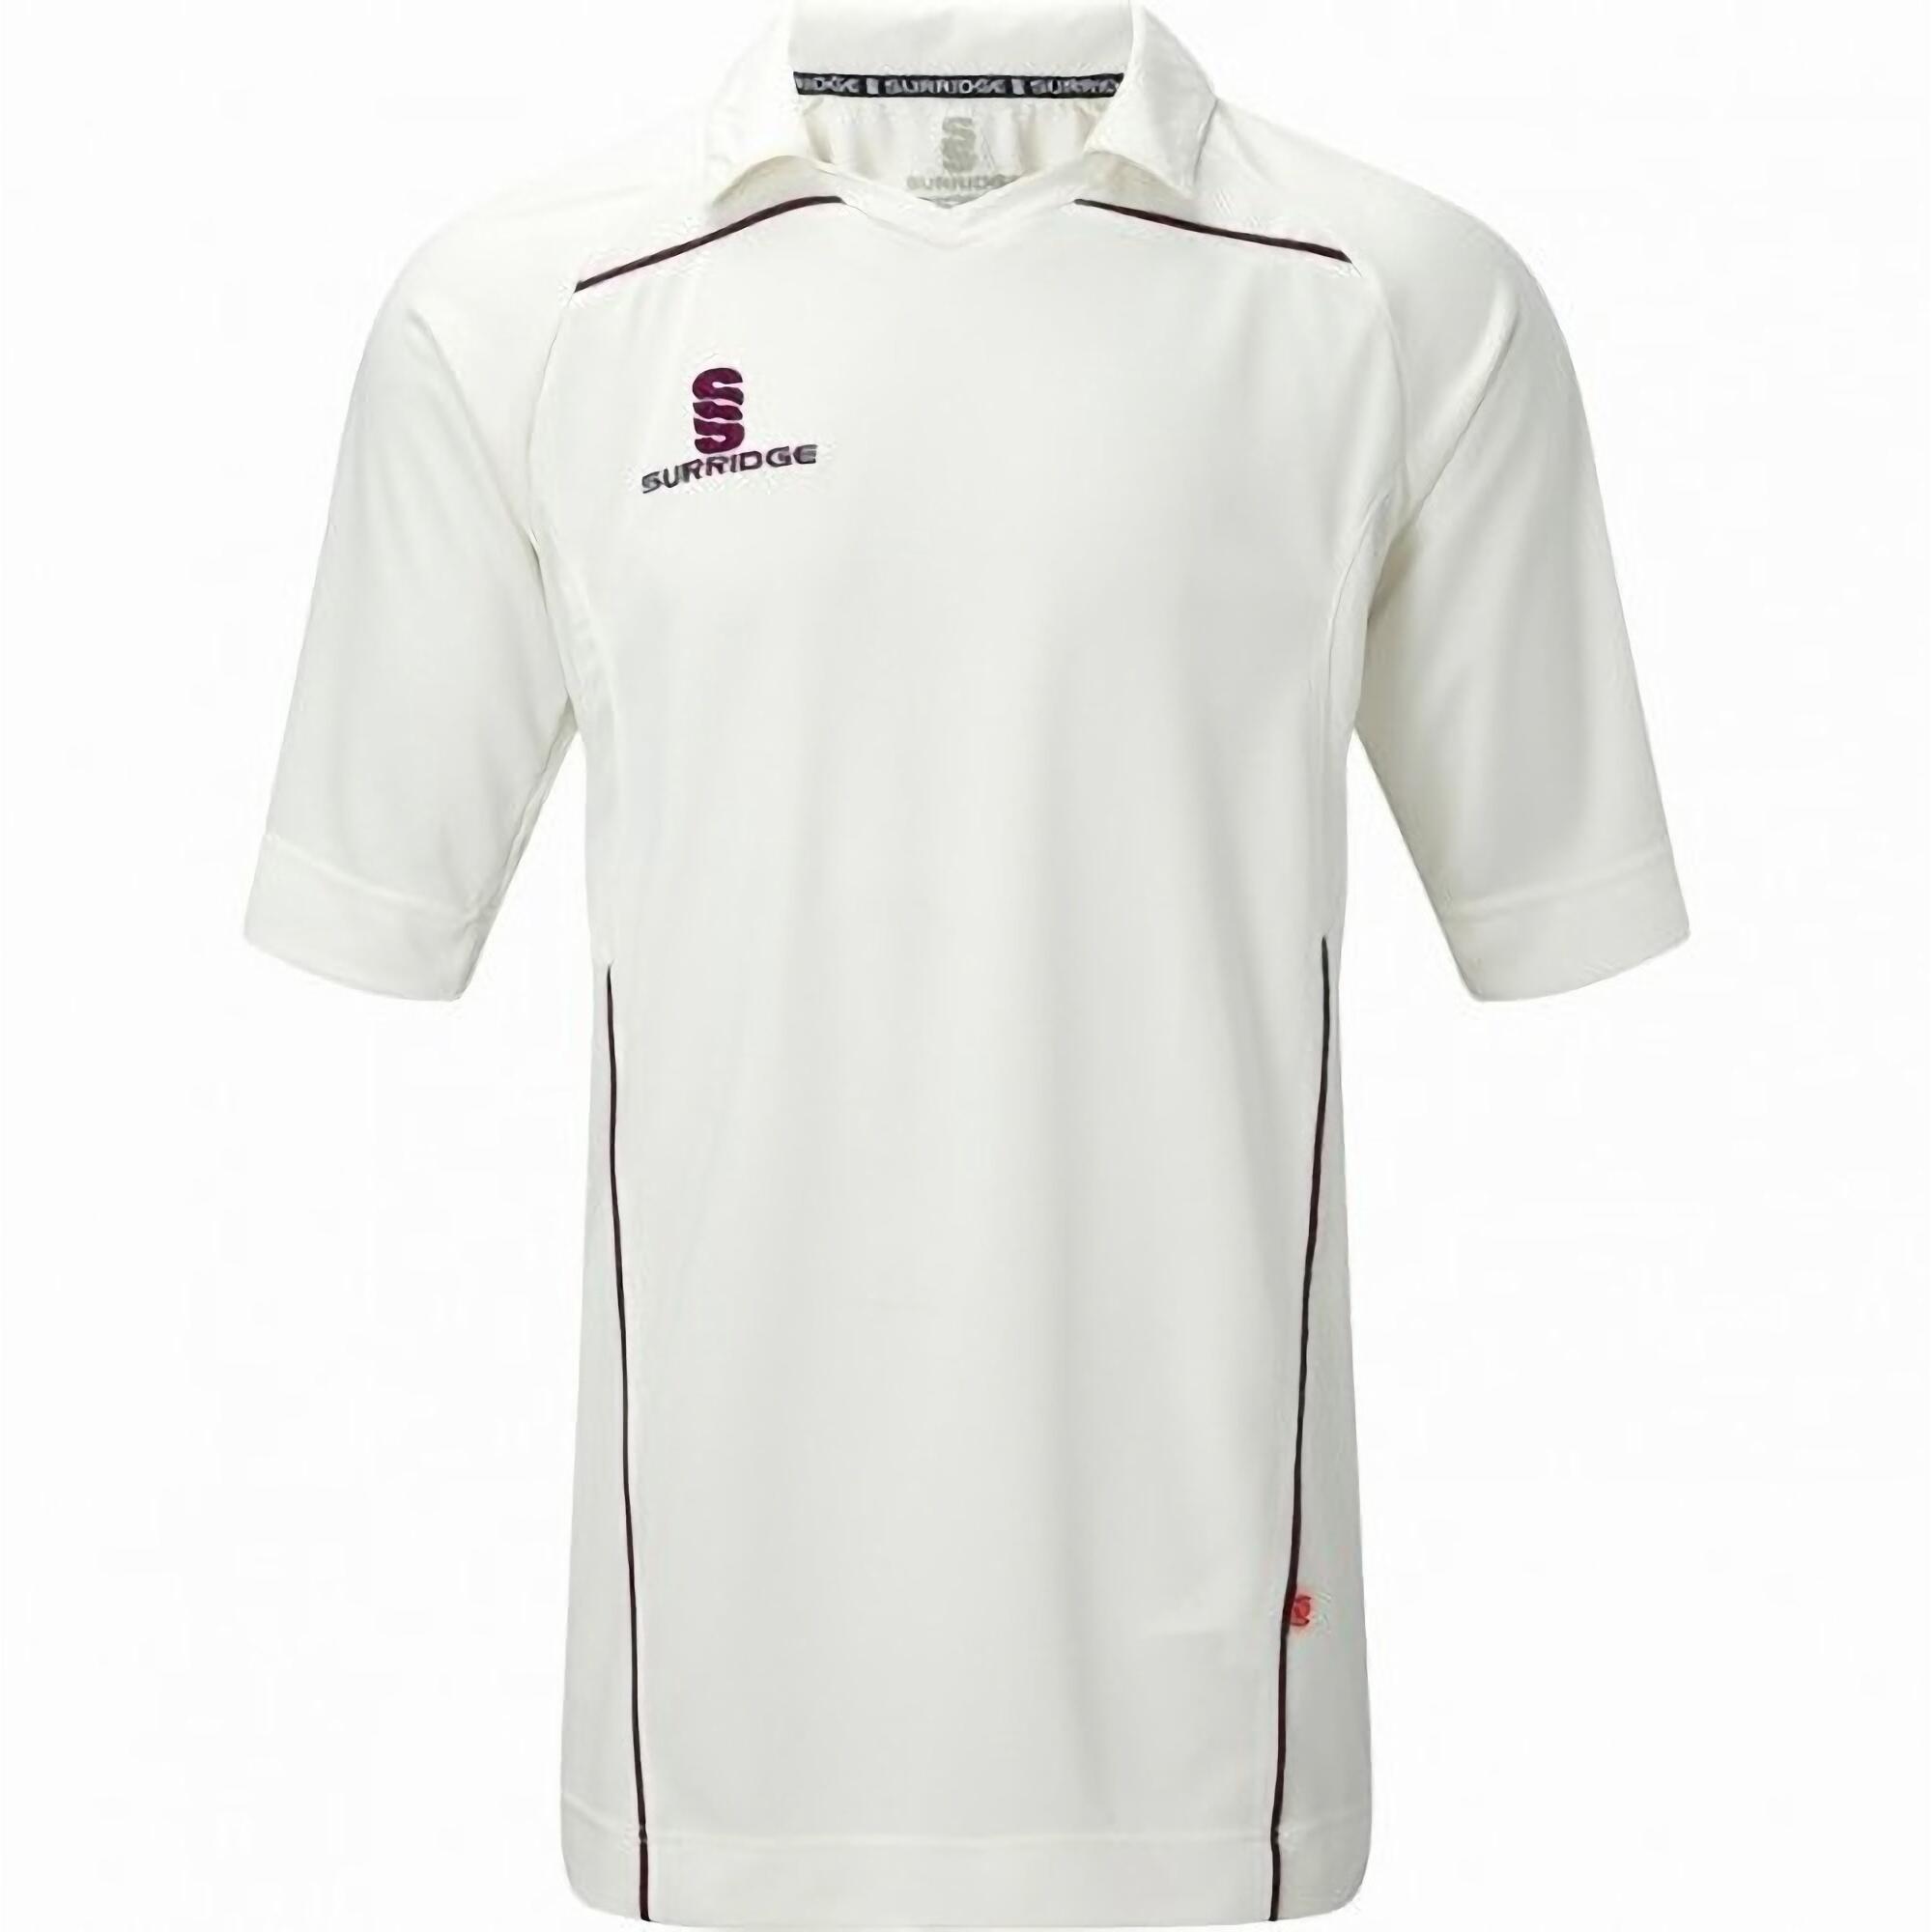 Mens Century Sports Cricket Shirt (White/ Maroon trim) 1/1